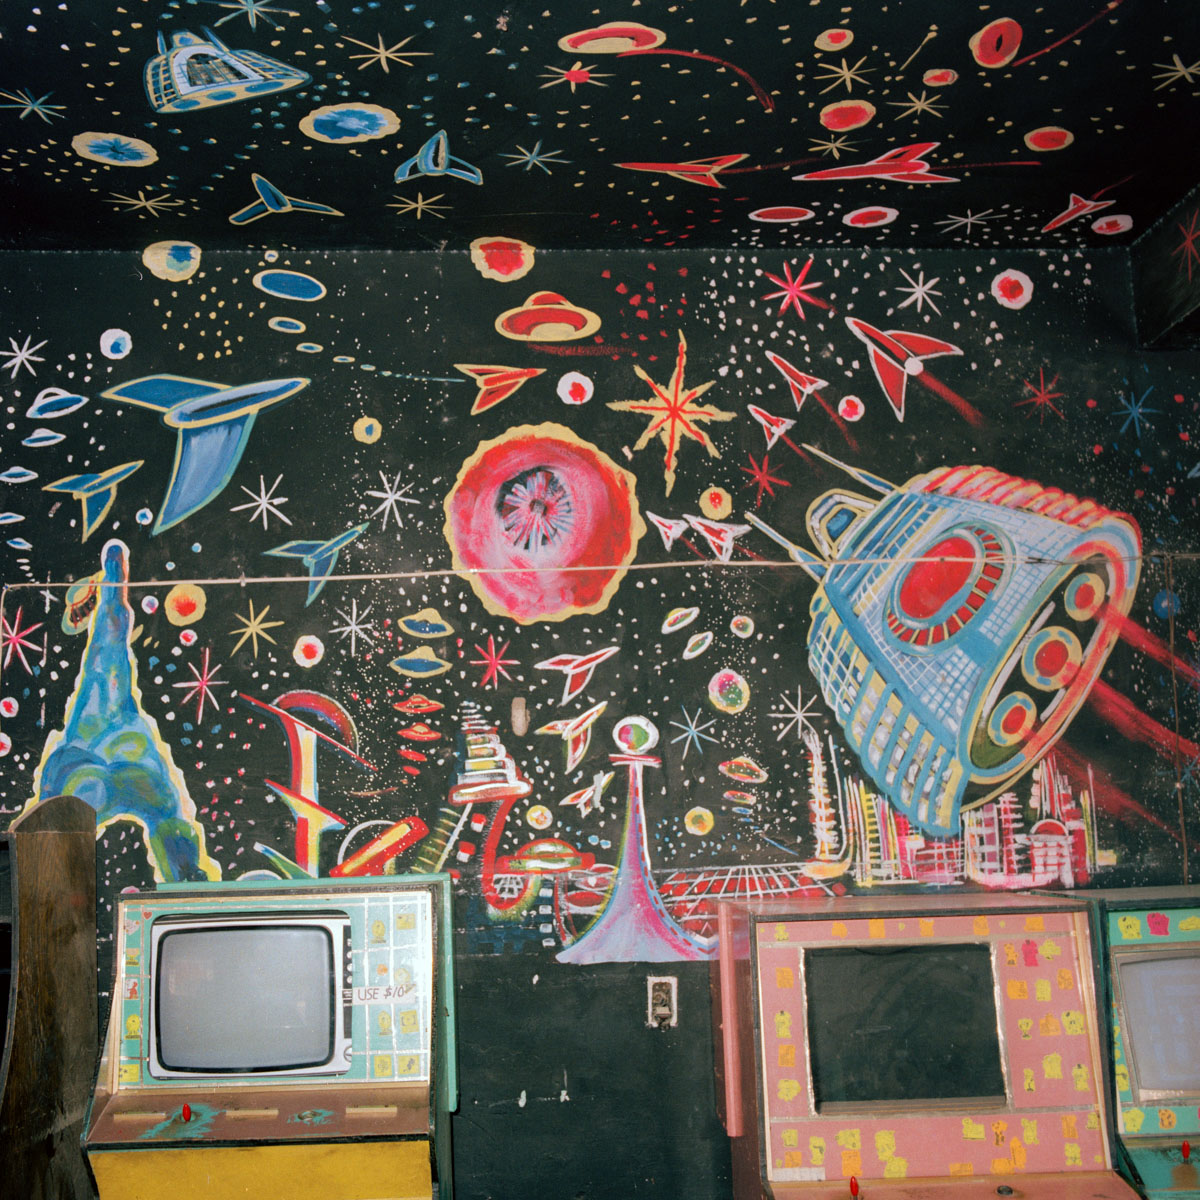 Games Arcade, Juchitán, Oaxaca, México 1986